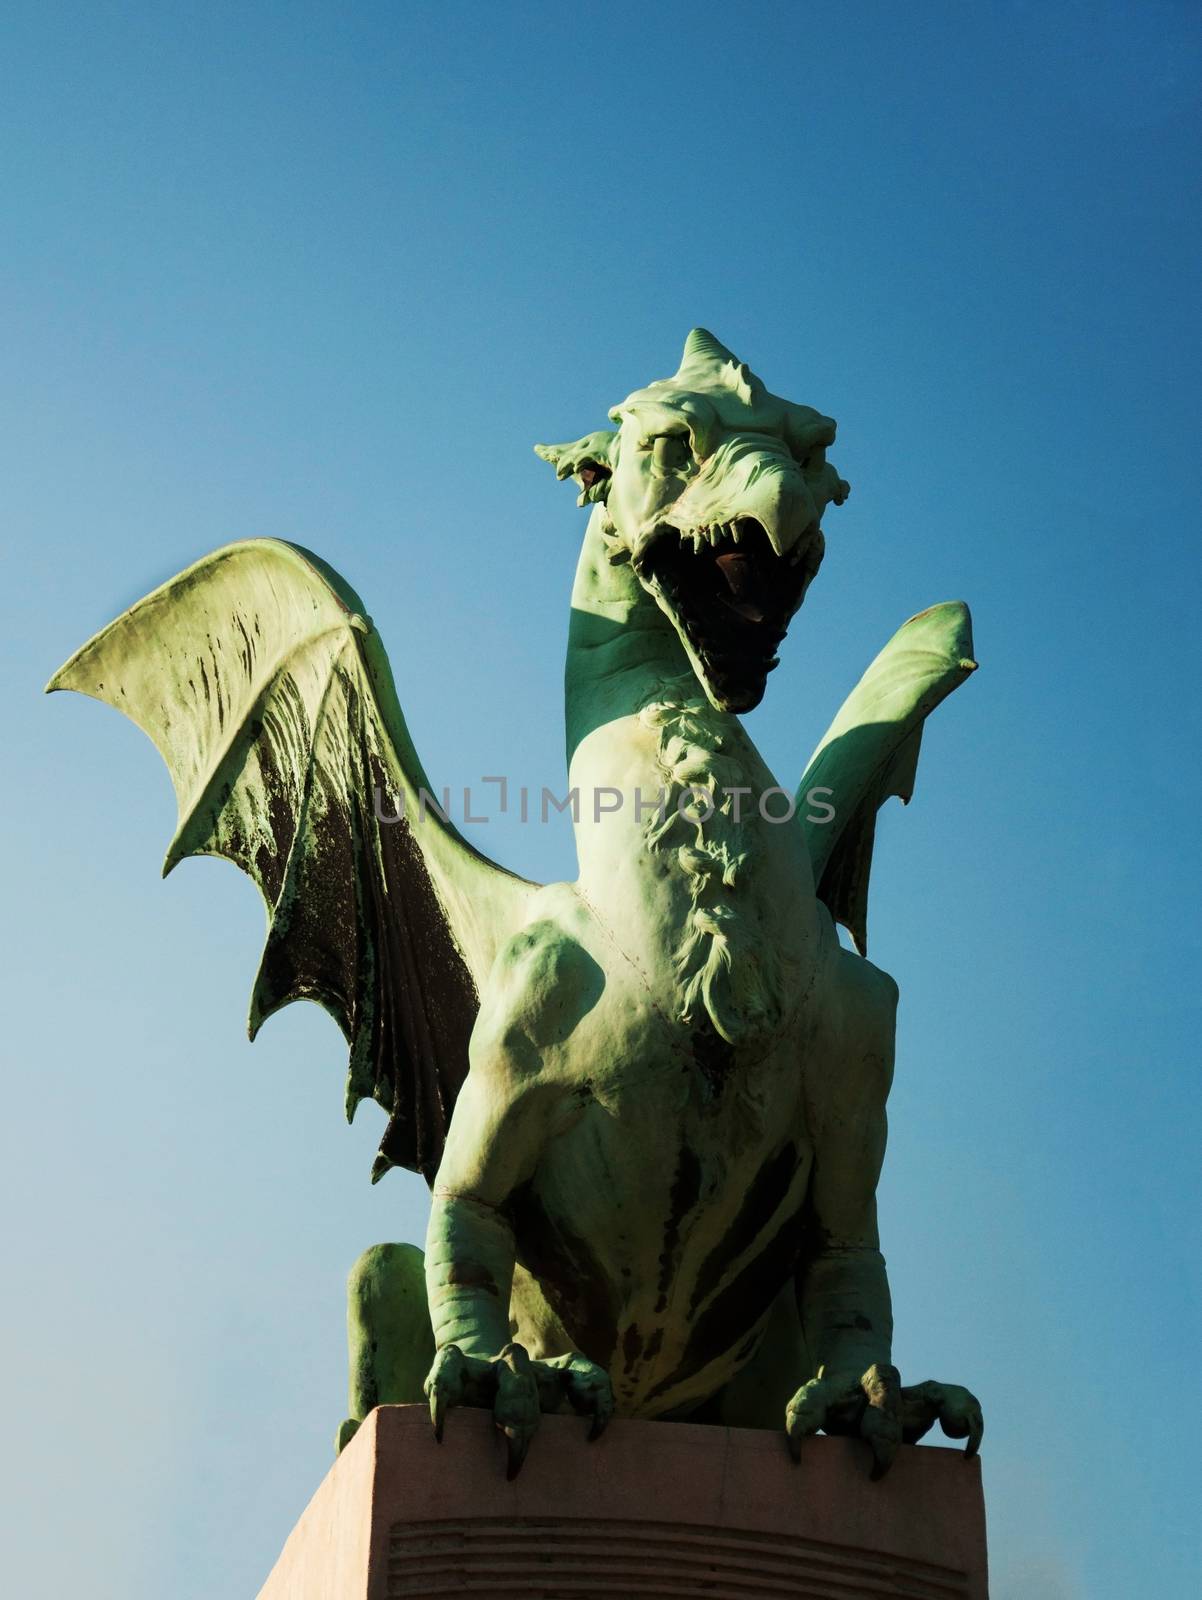 Ljubljana dragon by tony4urban